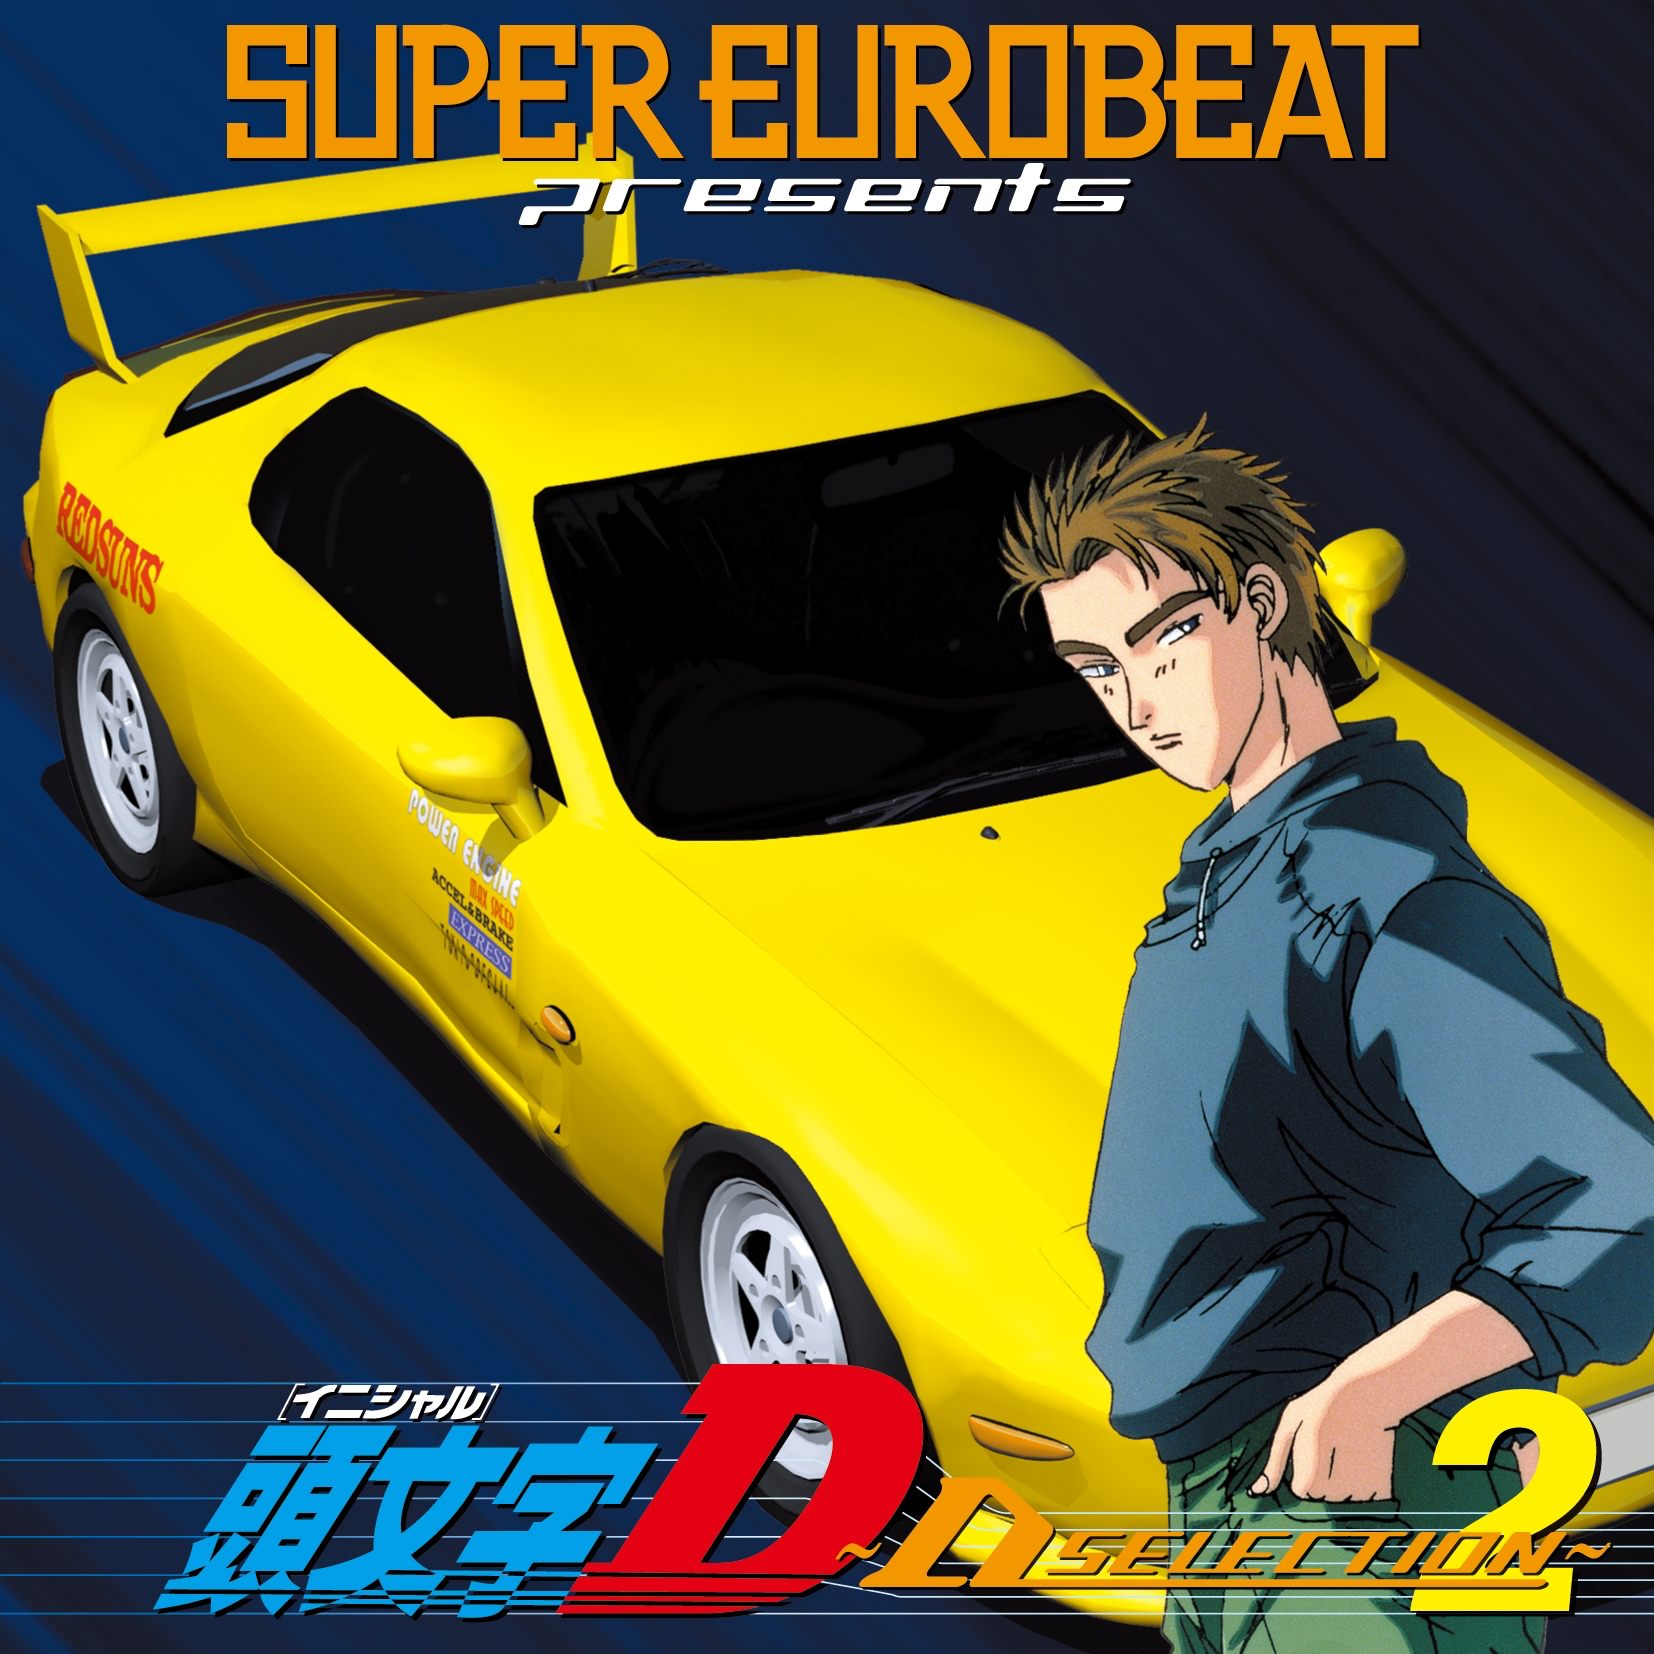 Super Eurobeat Initial D 4th Series Soundtrack